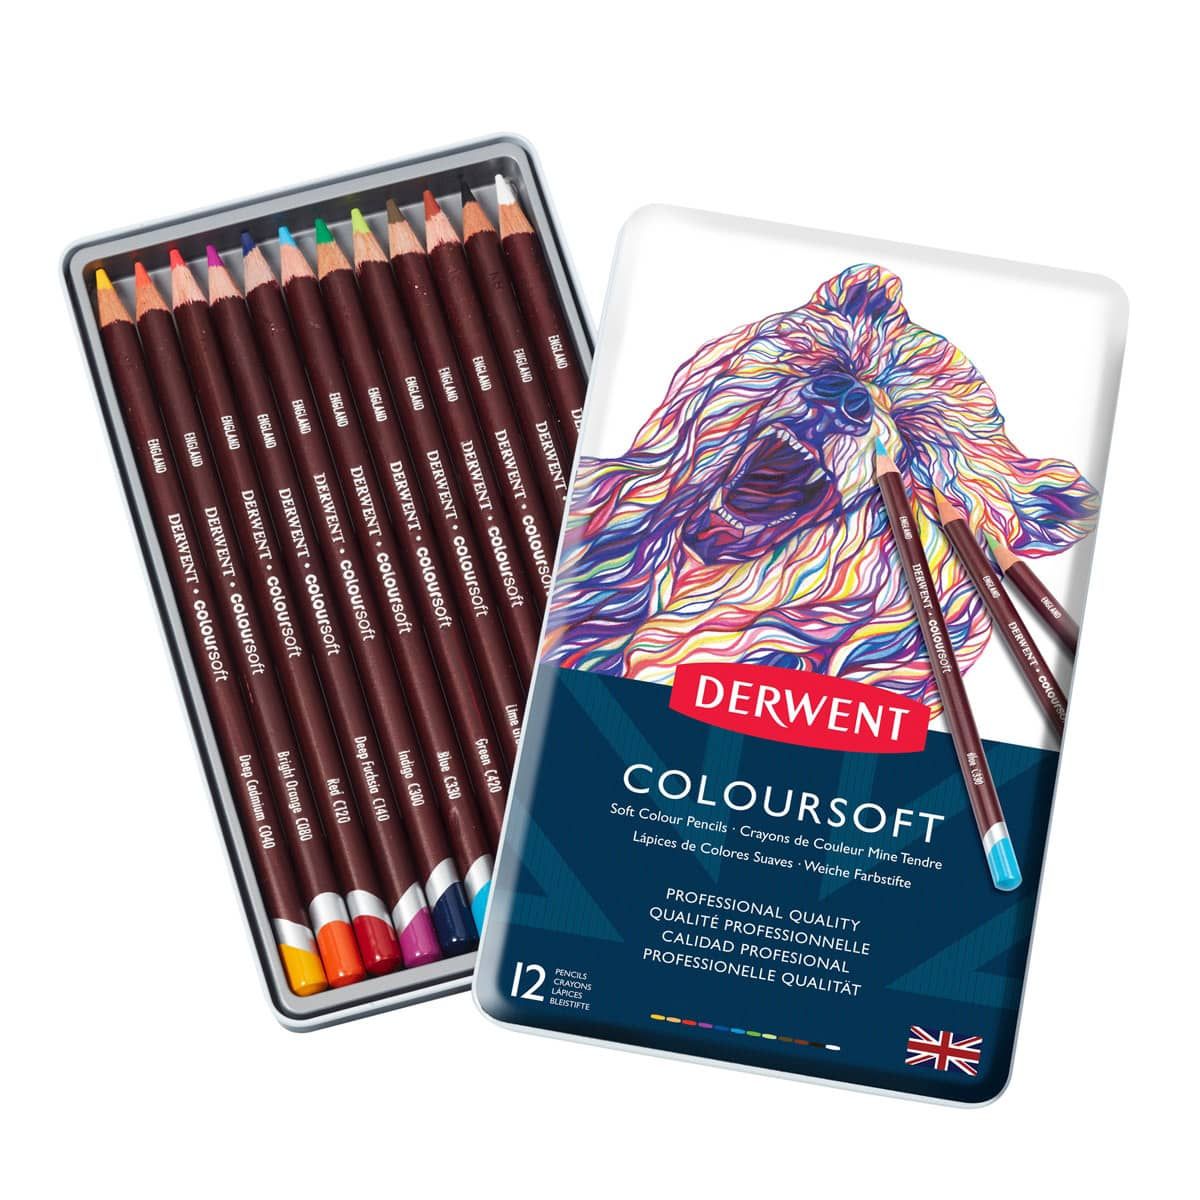 New Sealed Box Tin Derwent Metallic Color Pencils Made in UK 12 Pencil Set